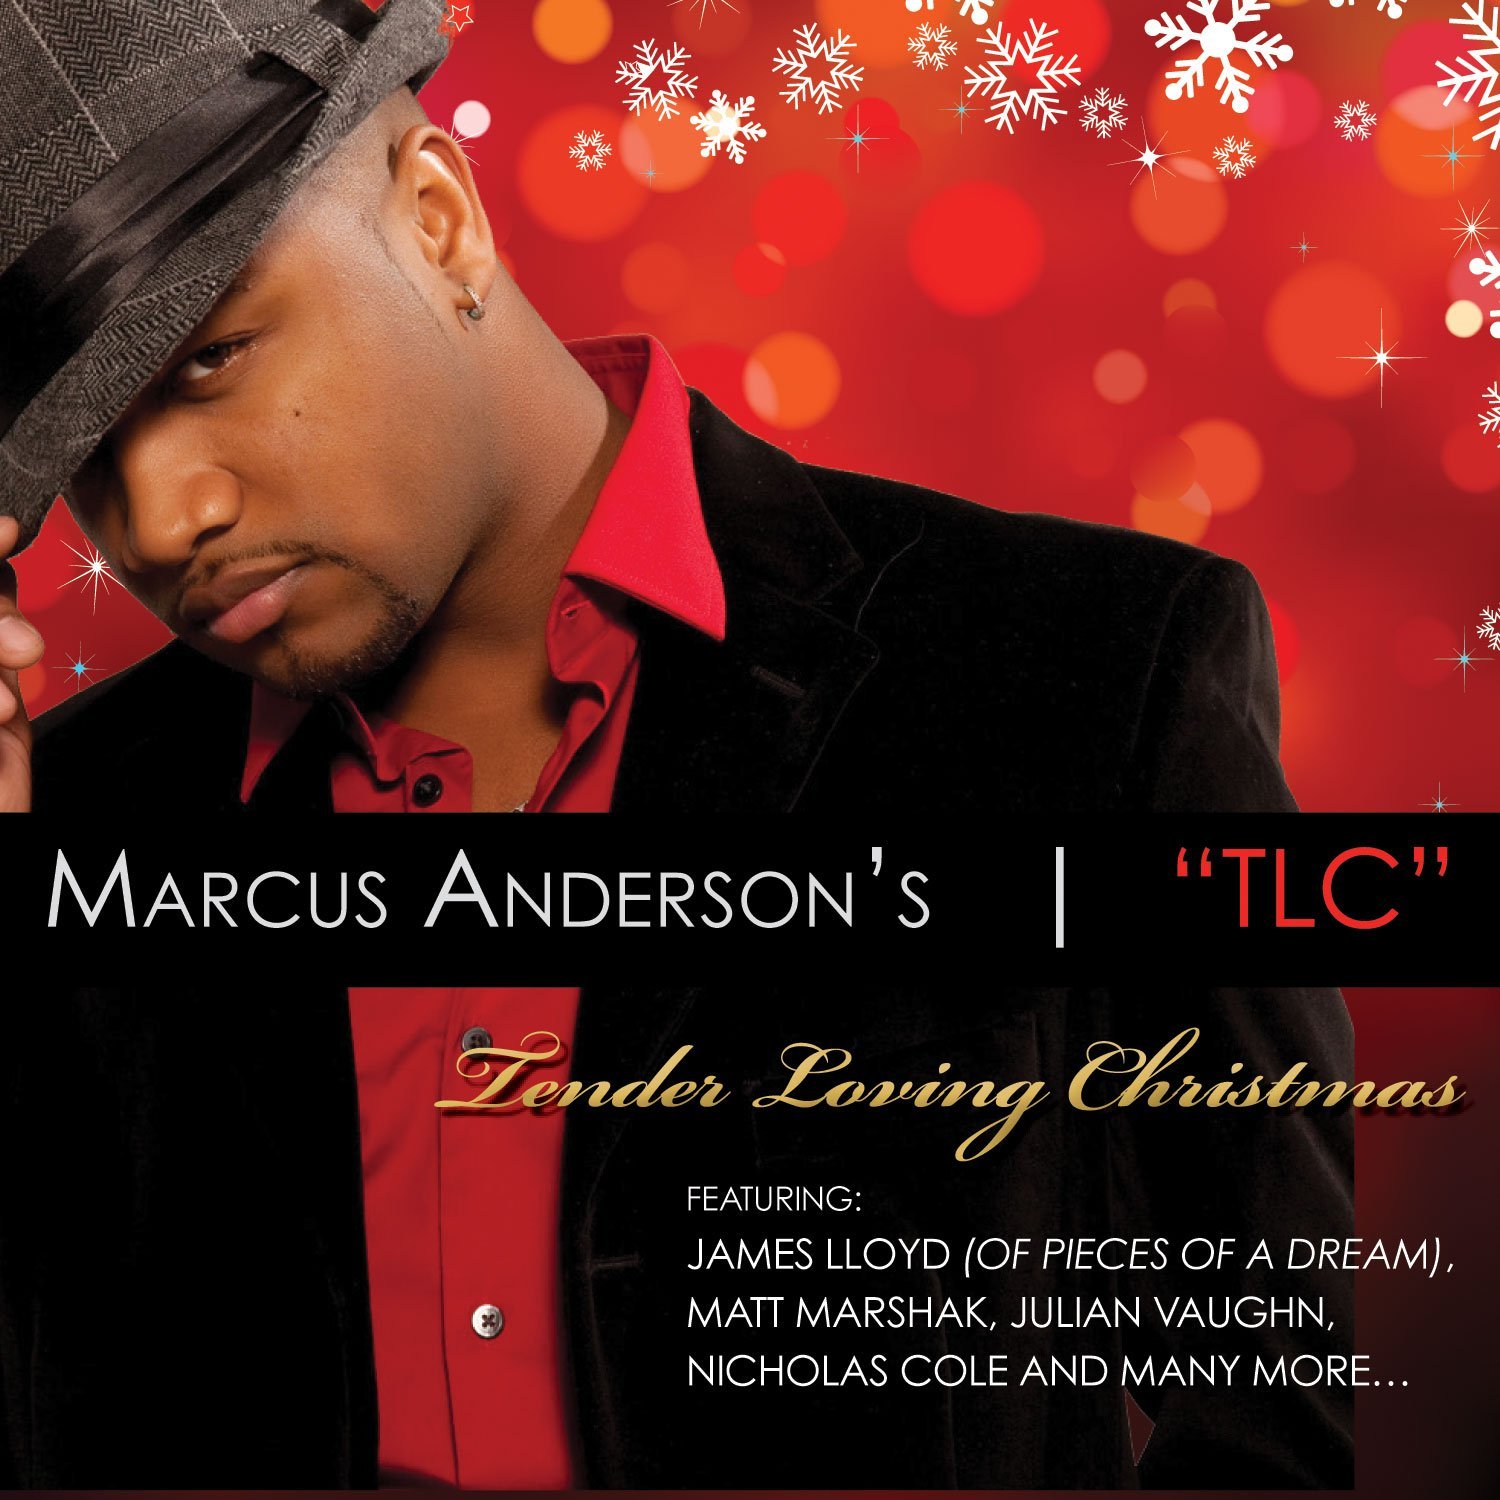 MARCUS ANDERSON - TLC - Tender Loving Christmas cover 